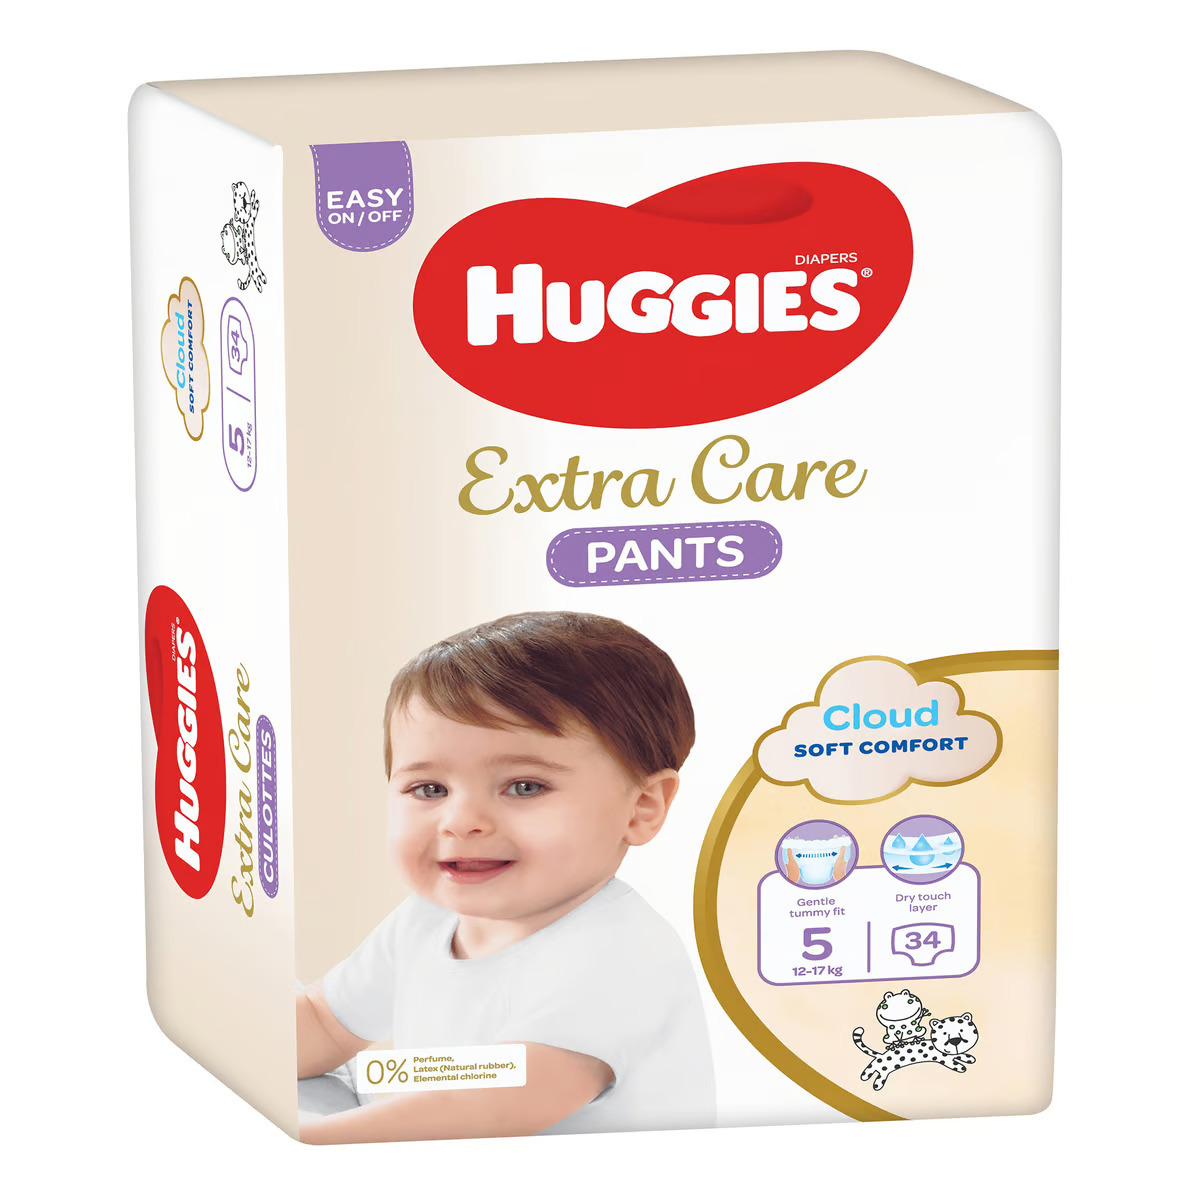 Huggies Extra Care Diaper Pants Size 5, 12-17 kg Value Pack 2 x 34 pcs